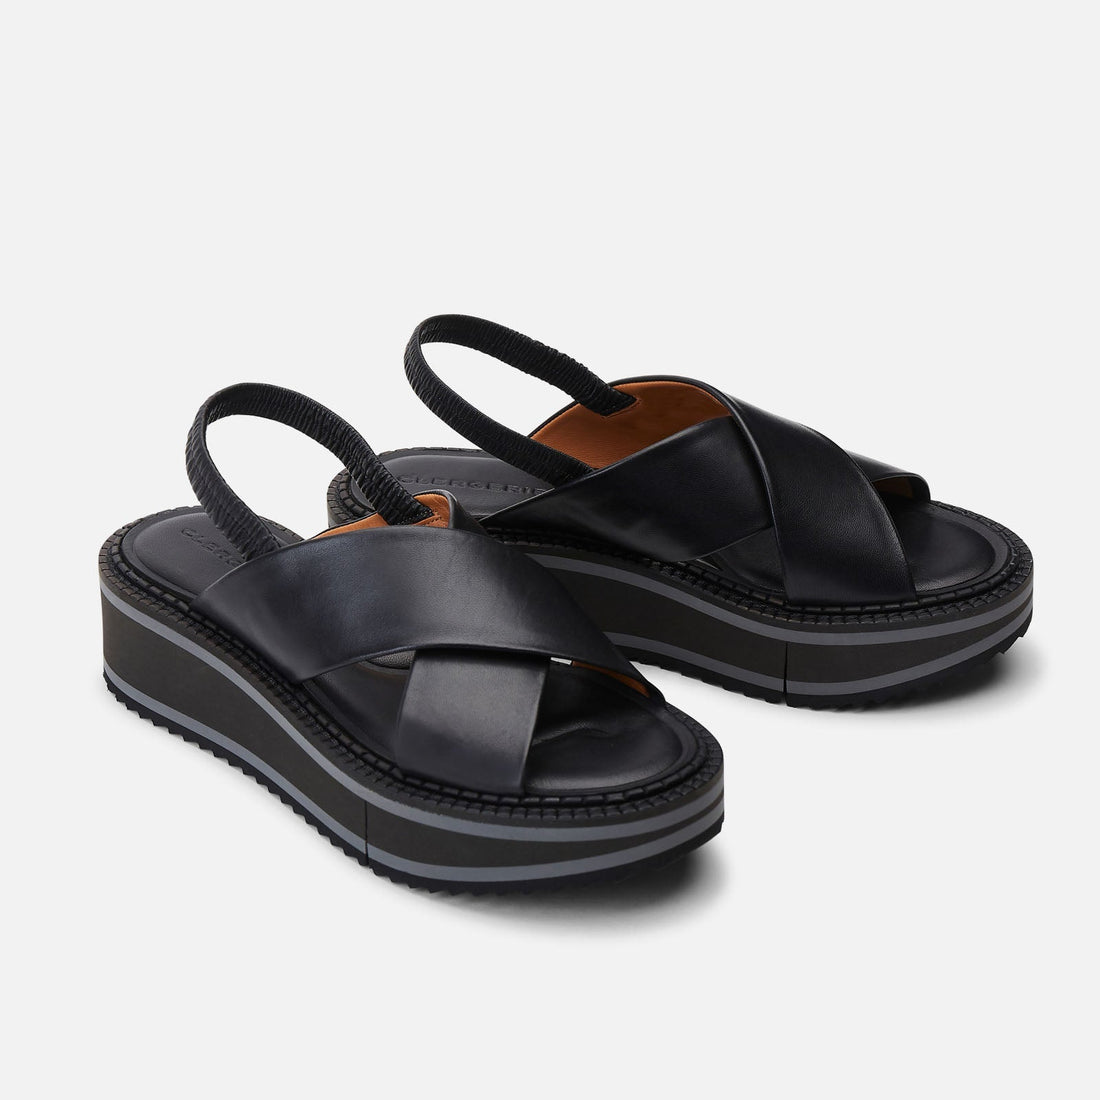 SANDALS - FREEDOM sandals, lambskin black - 3606064008586 - Clergerie Paris - Europe